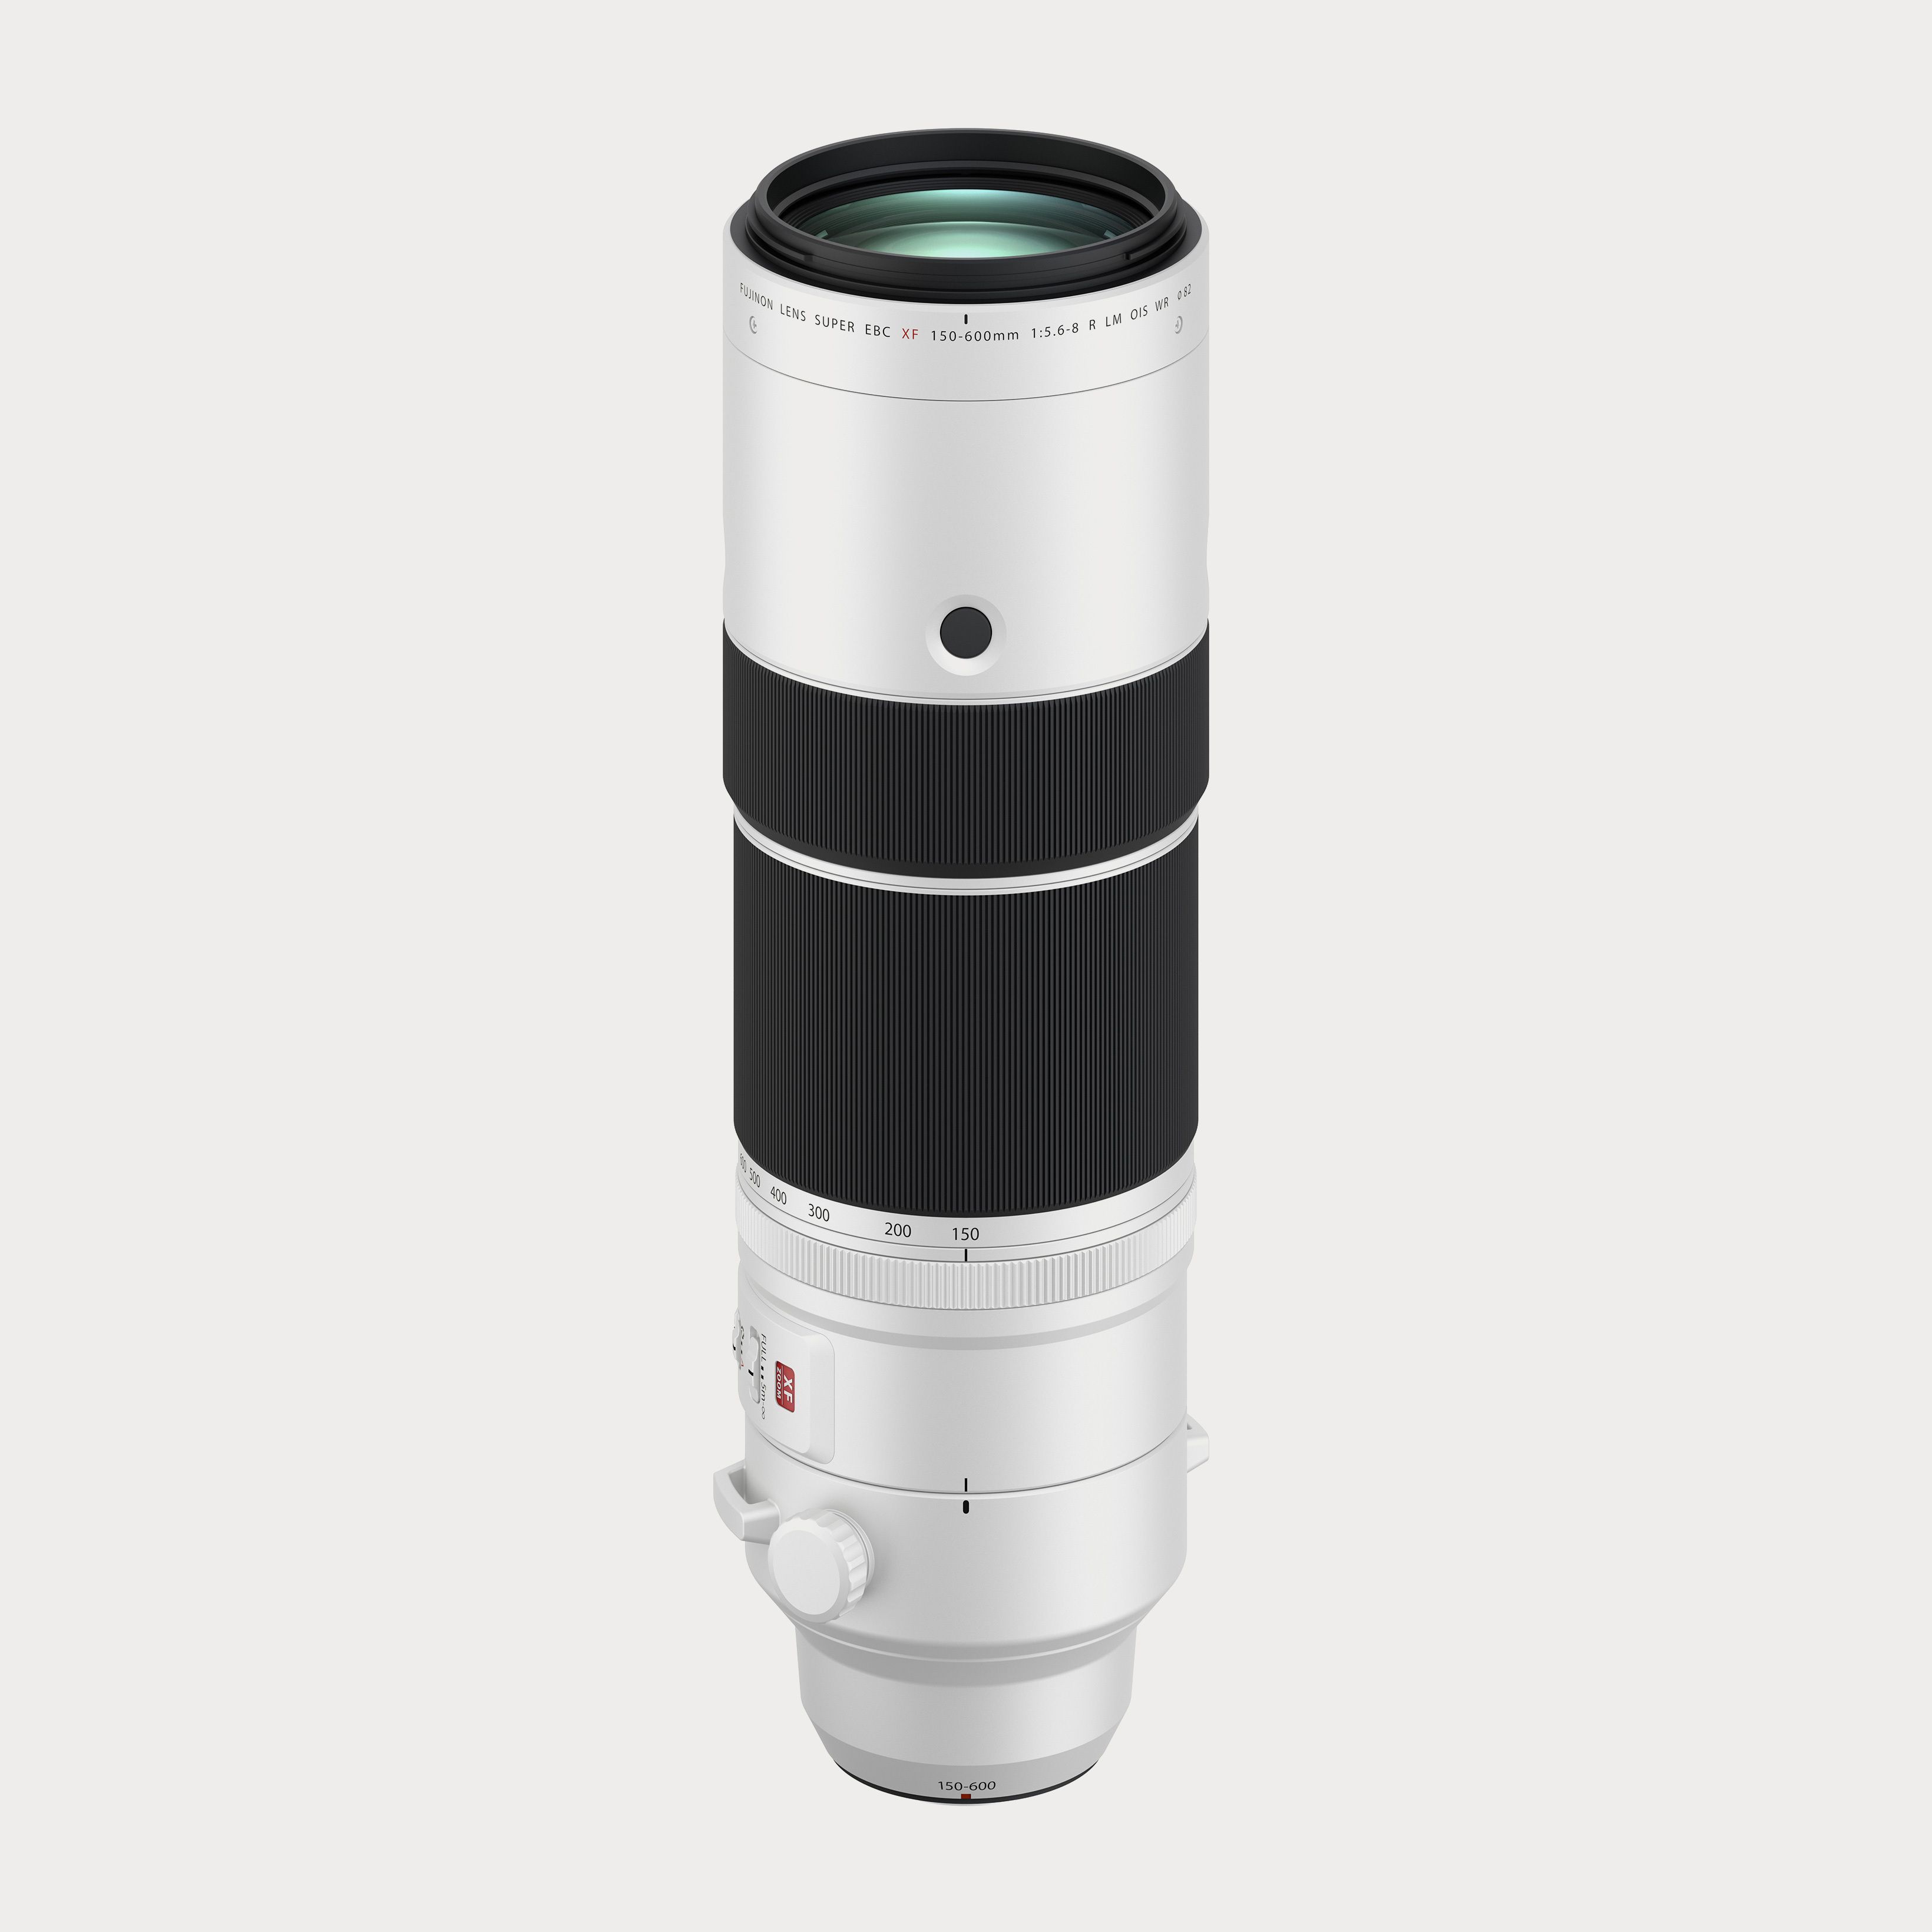 XF 80mm F2.8 R LM OIS Macro Lens | Moment